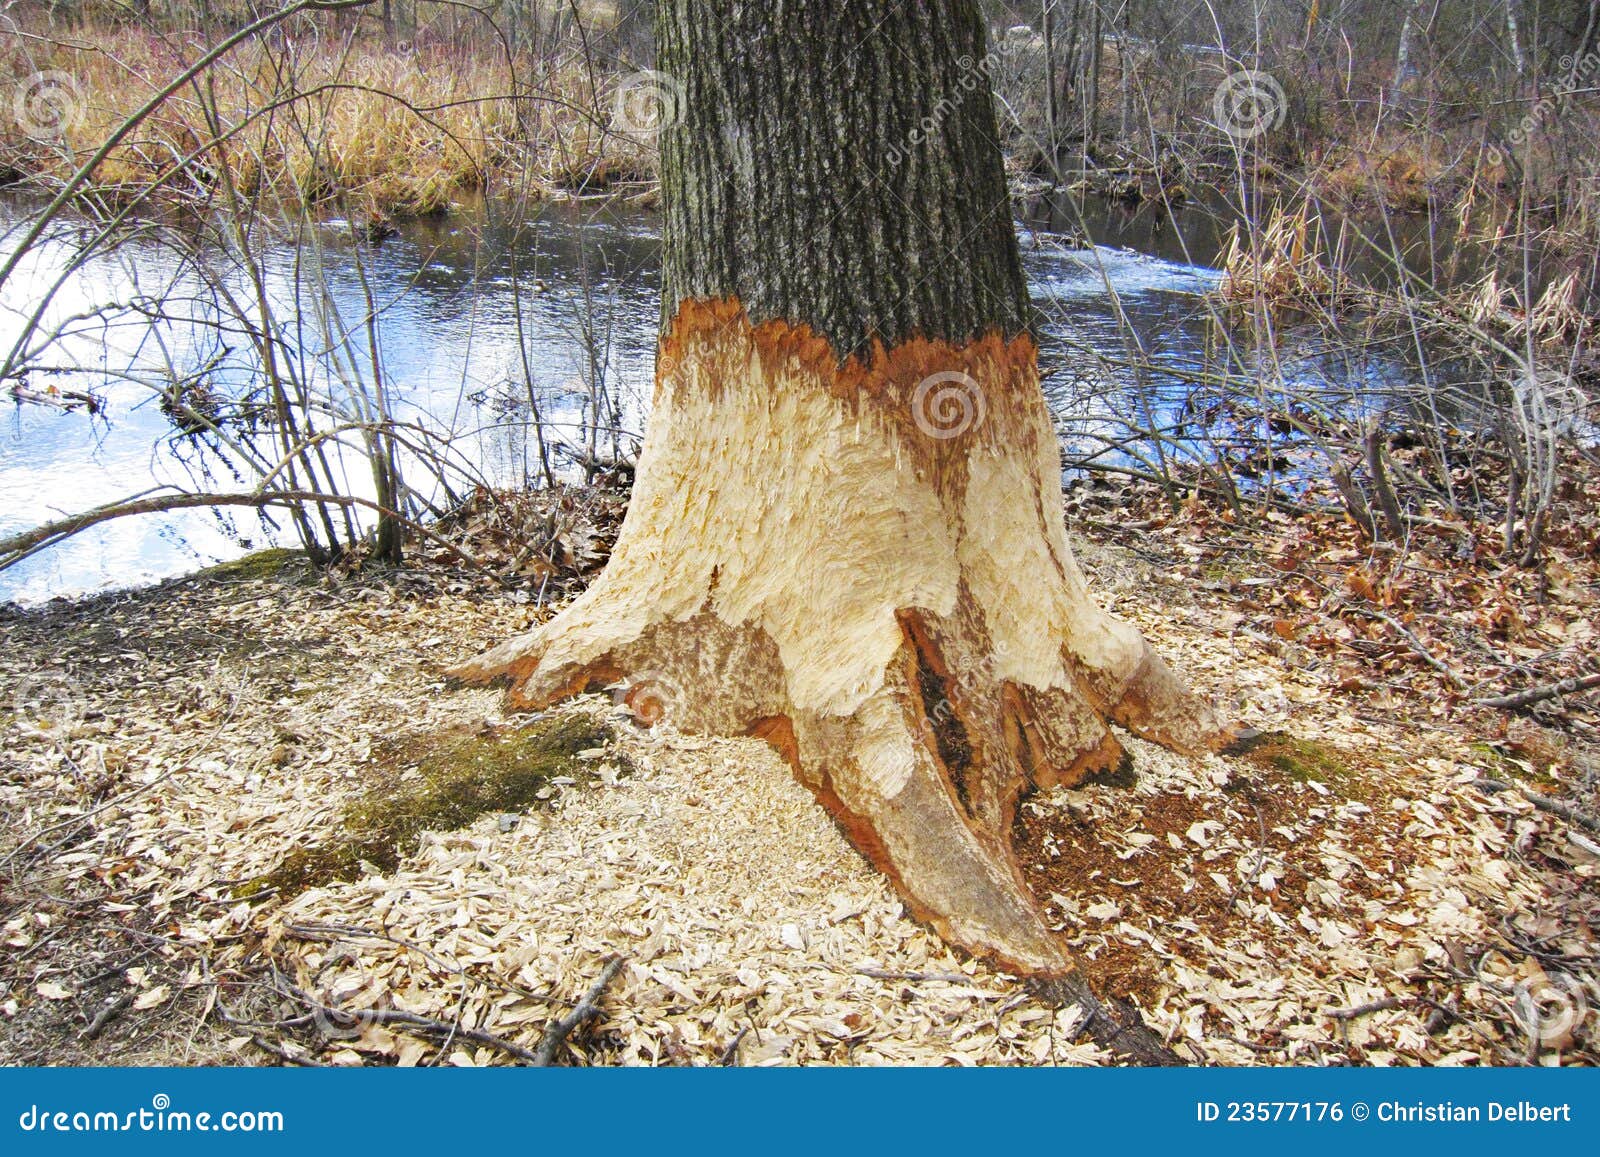 beaver-tree-damage-23577176.jpg